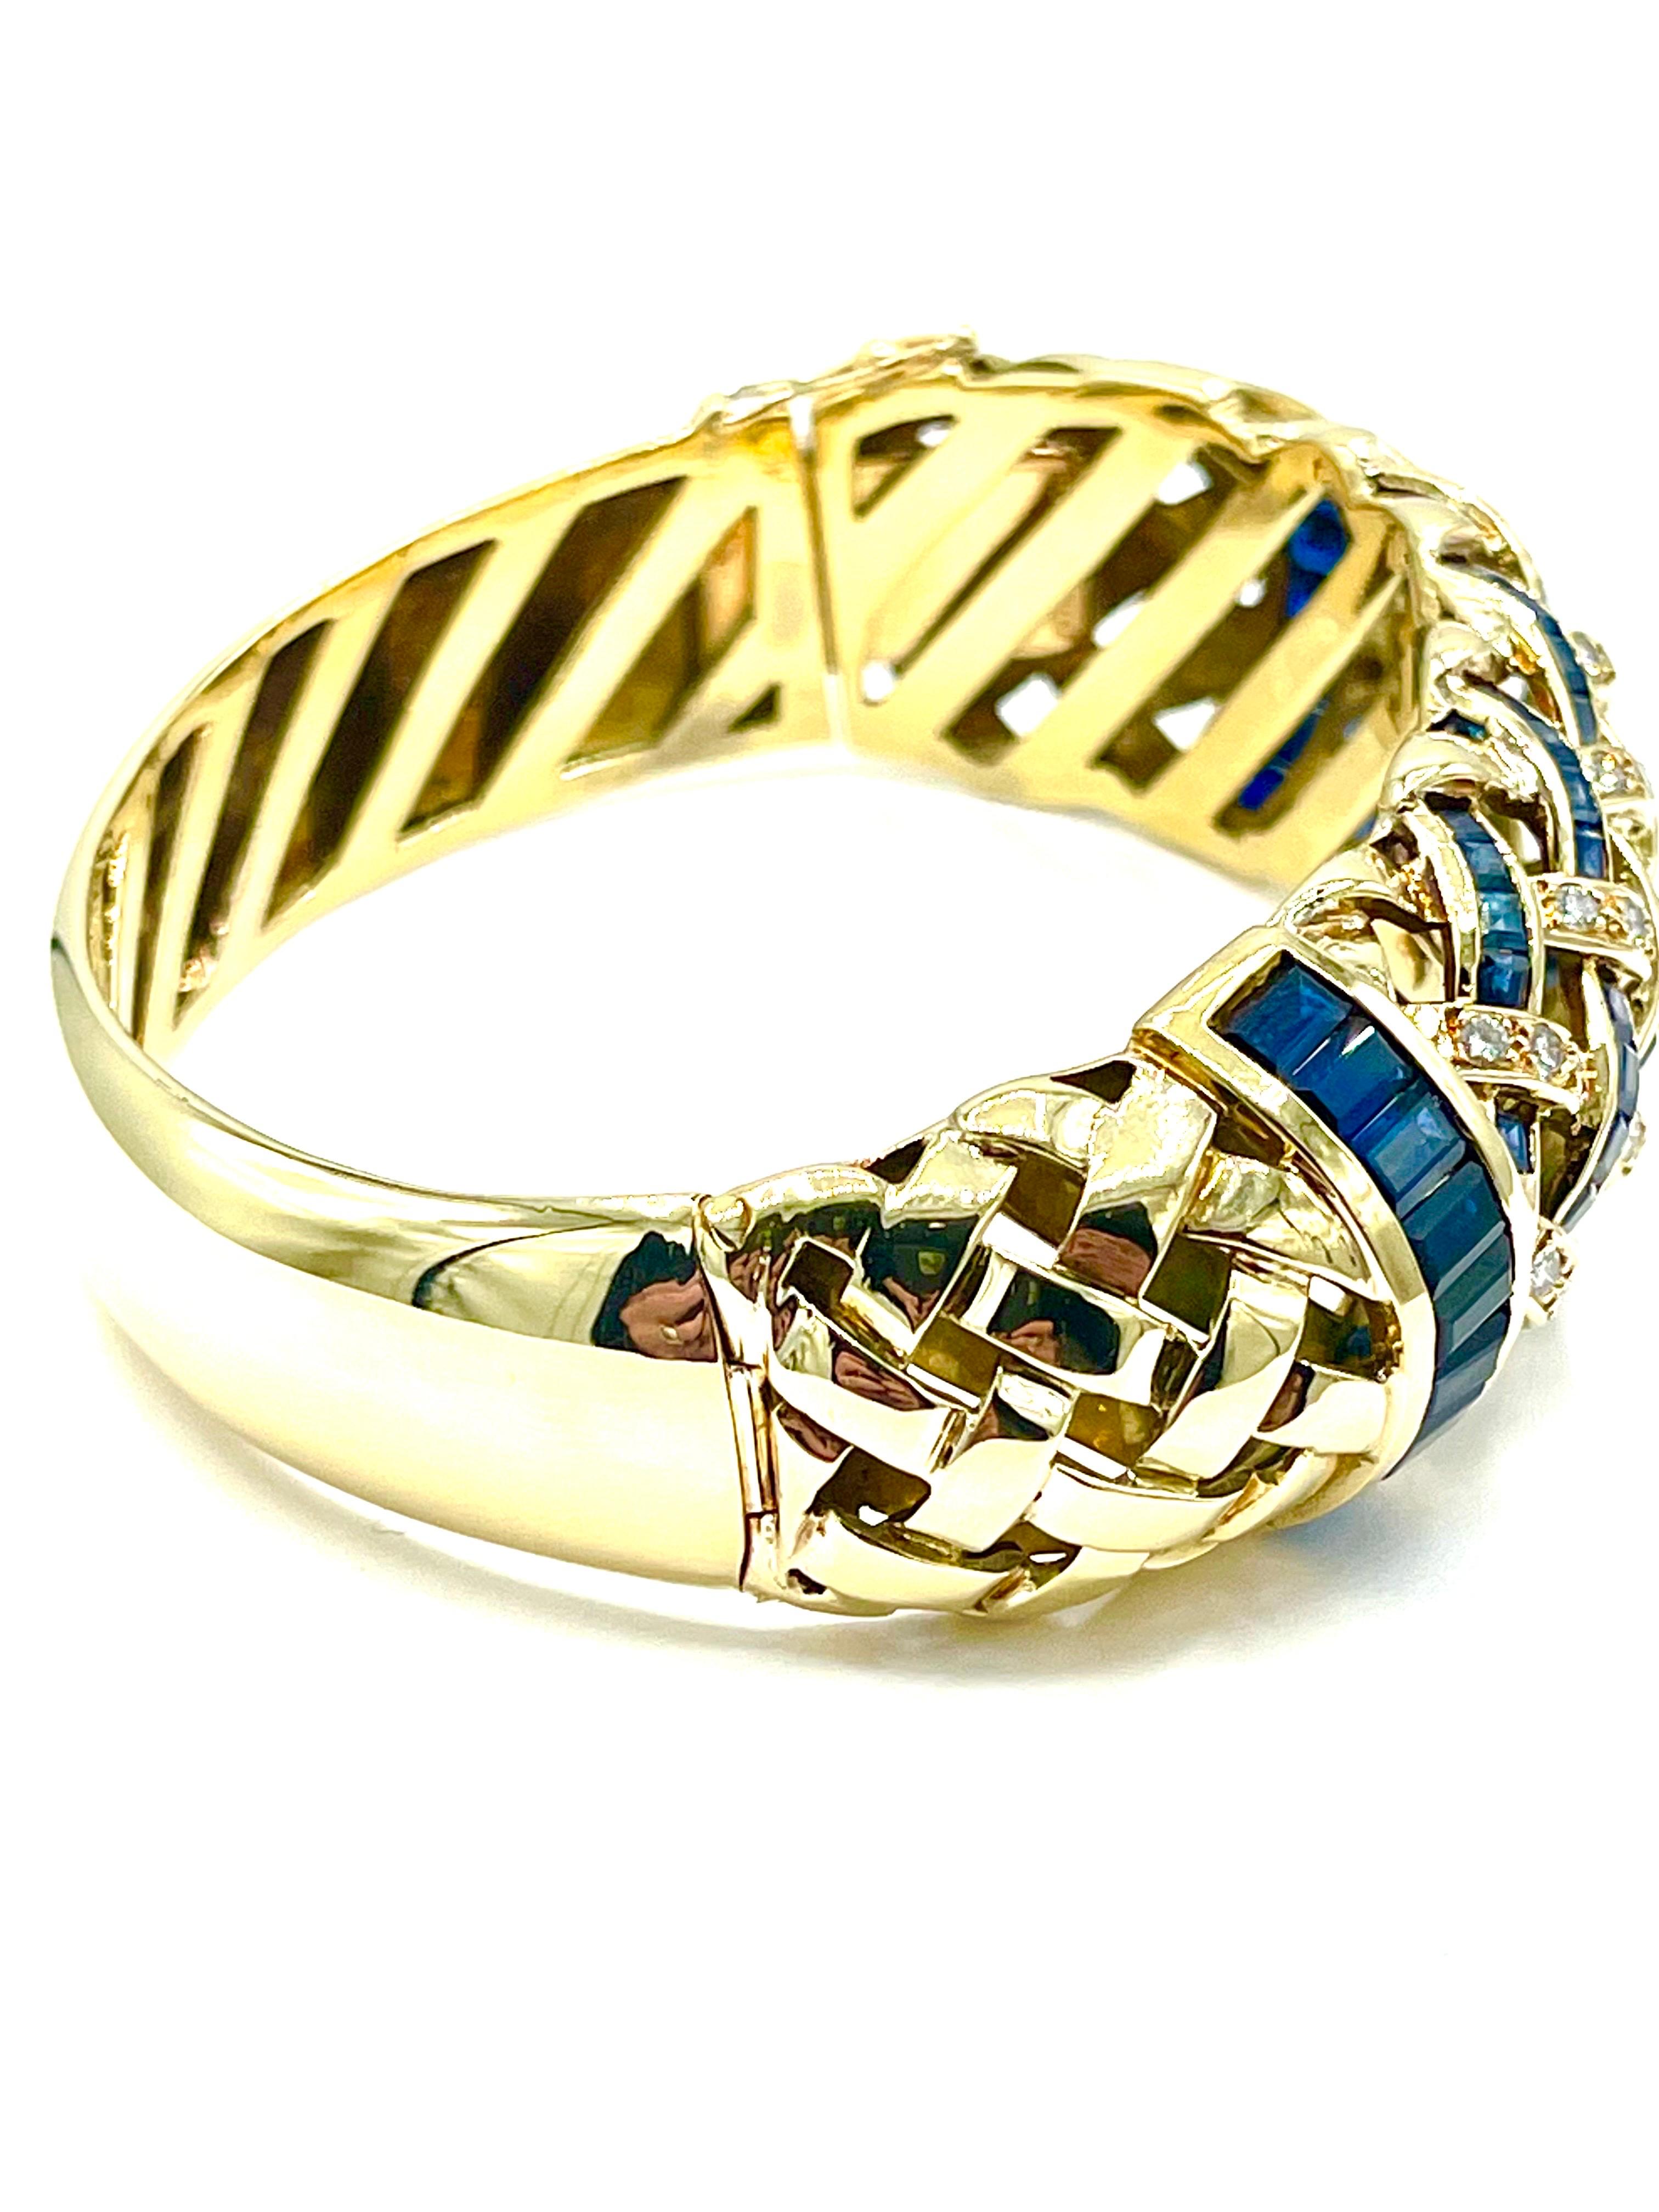 Square Cut 54.20 Carats Blue Sapphire and 1.00 Carat Diamond Yellow Gold Bracelet